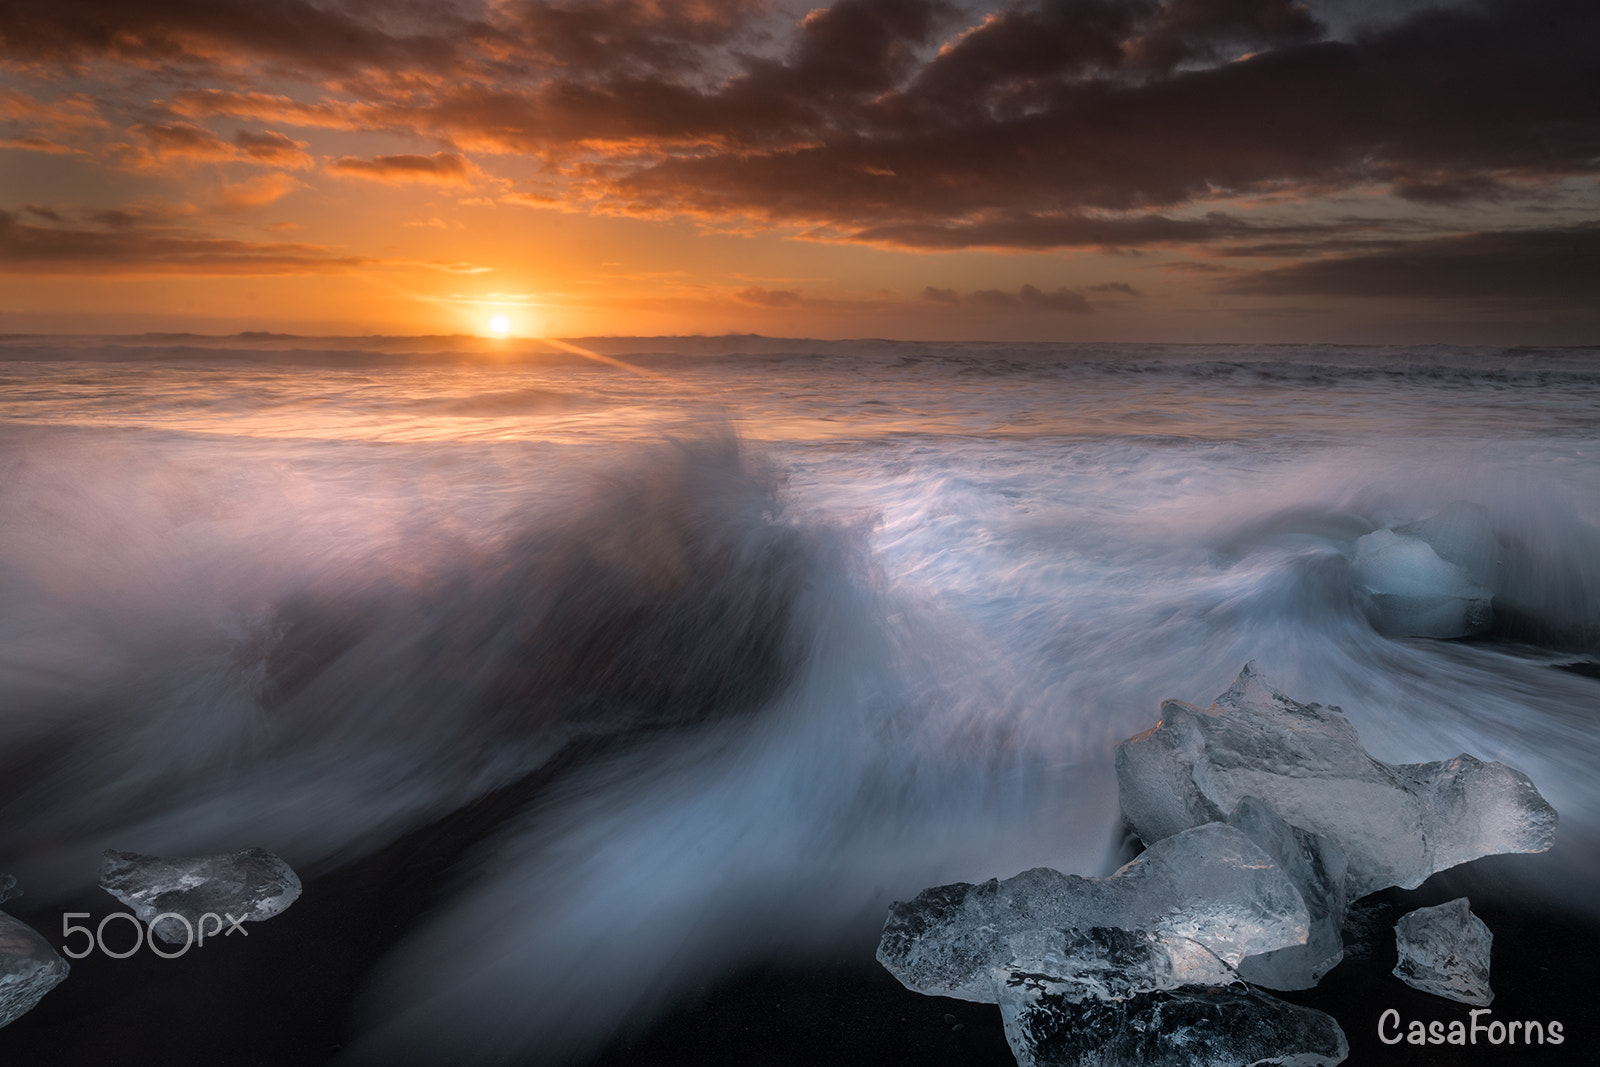 VARIO-ELMARIT 1:2.8-4.0/24-90mm ASPH. OIS sample photo. Ice beach sunrise photography